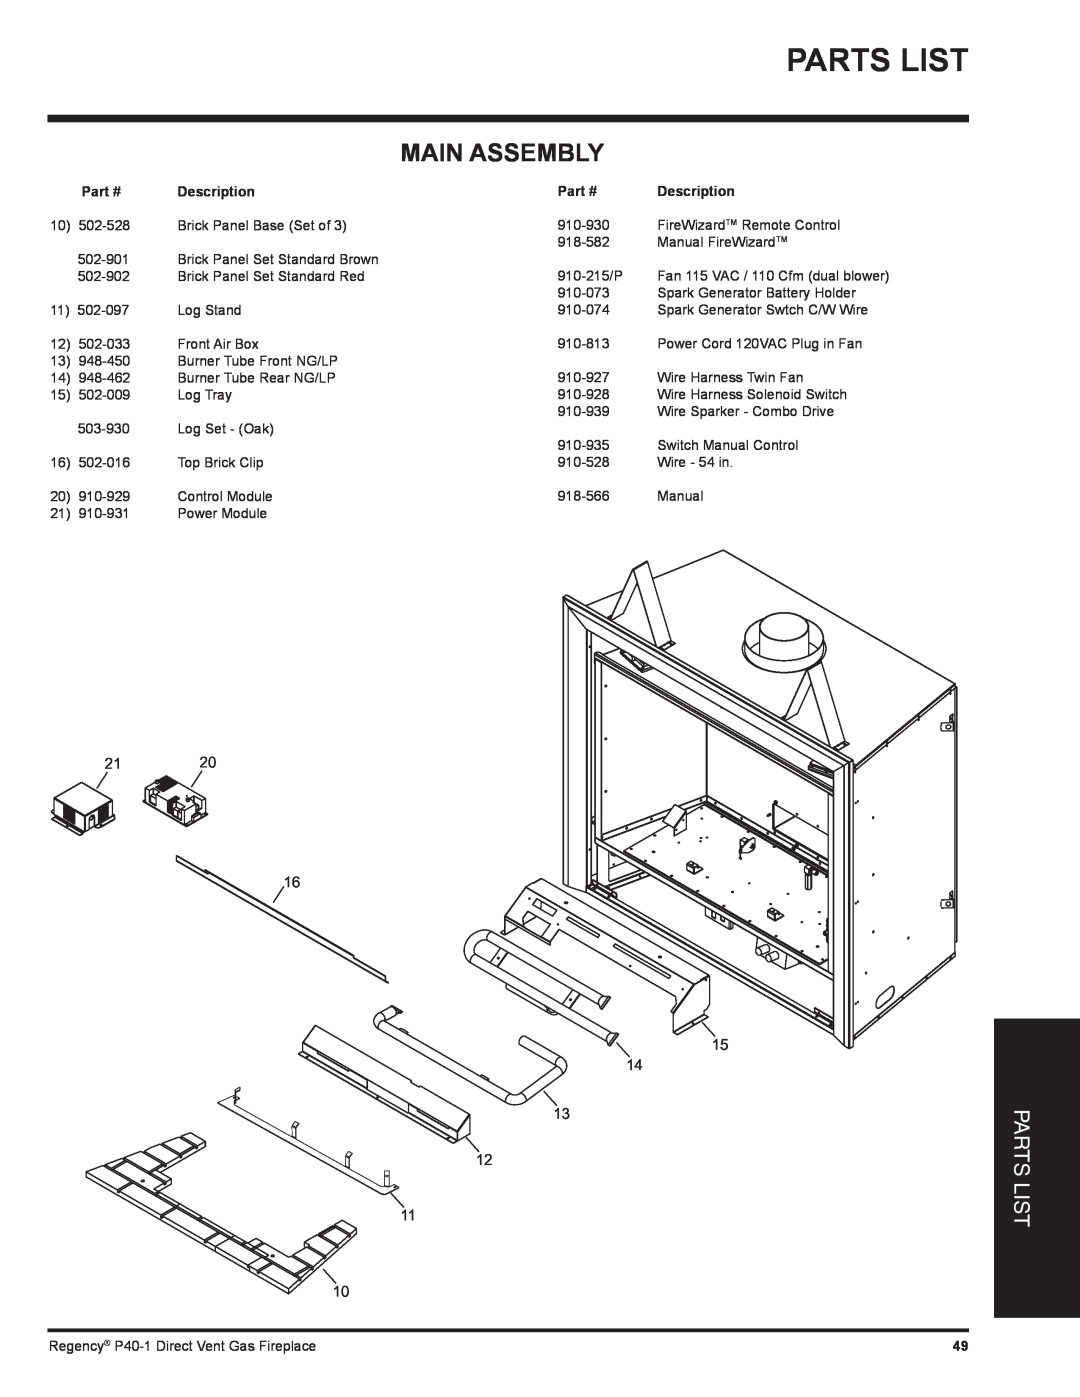 Regency P40-LP1, P40-NG1 installation manual Parts List, Main Assembly, Part #, Description 